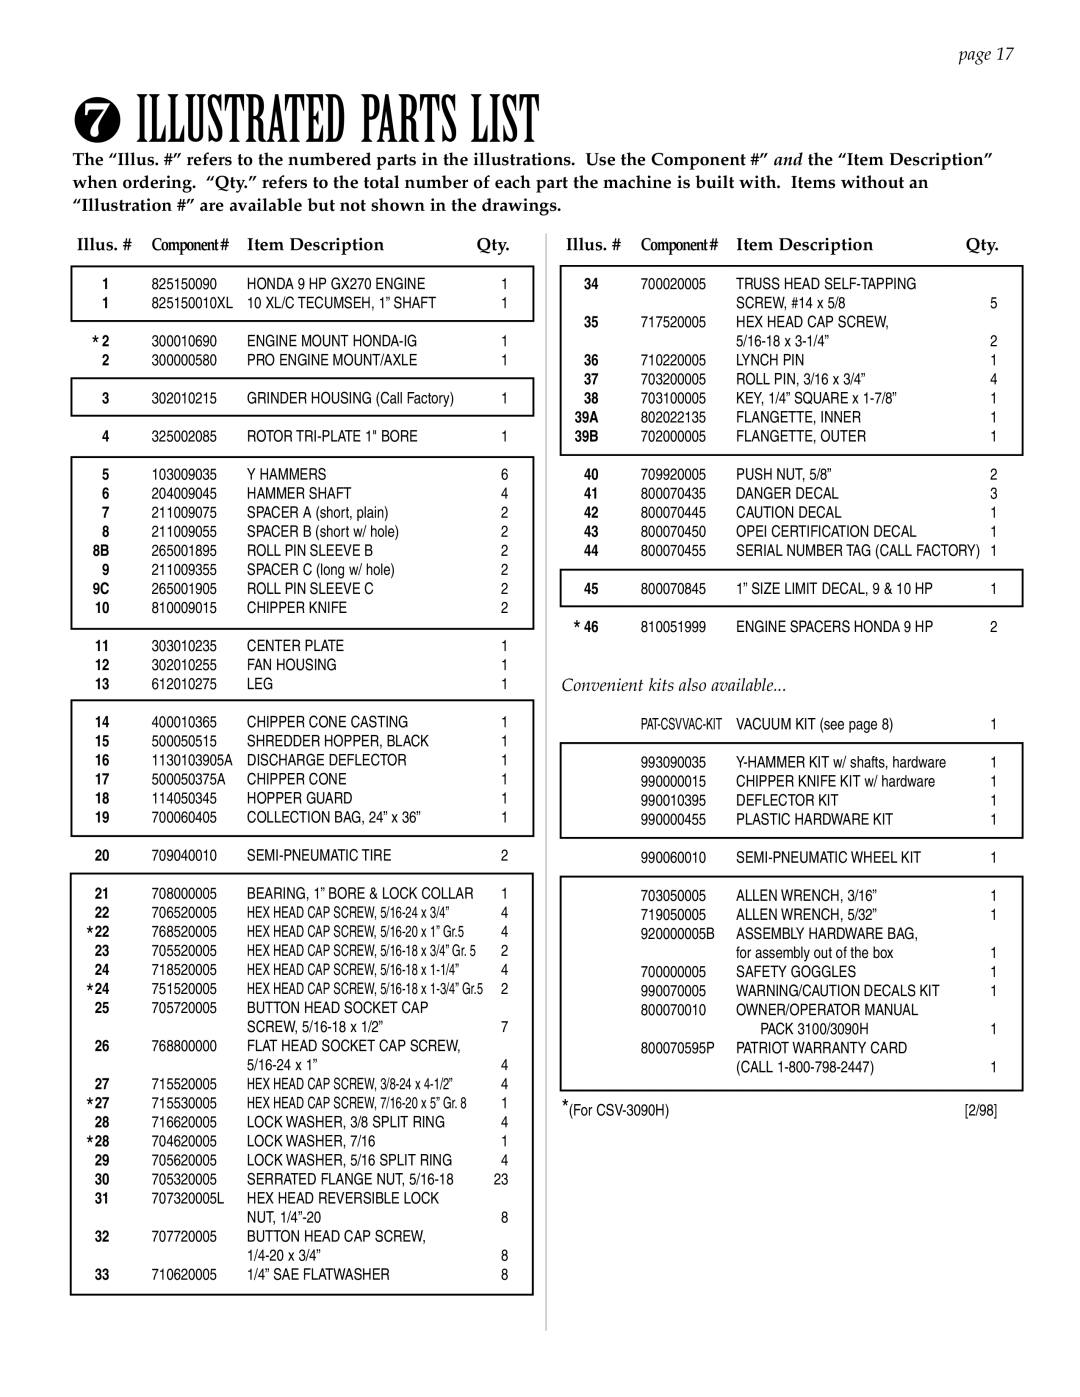 Patriot Products 10F-CSV manual ❼ ILLUSTRATED PARTS LIST, Illus. #, Component#, Item Description 